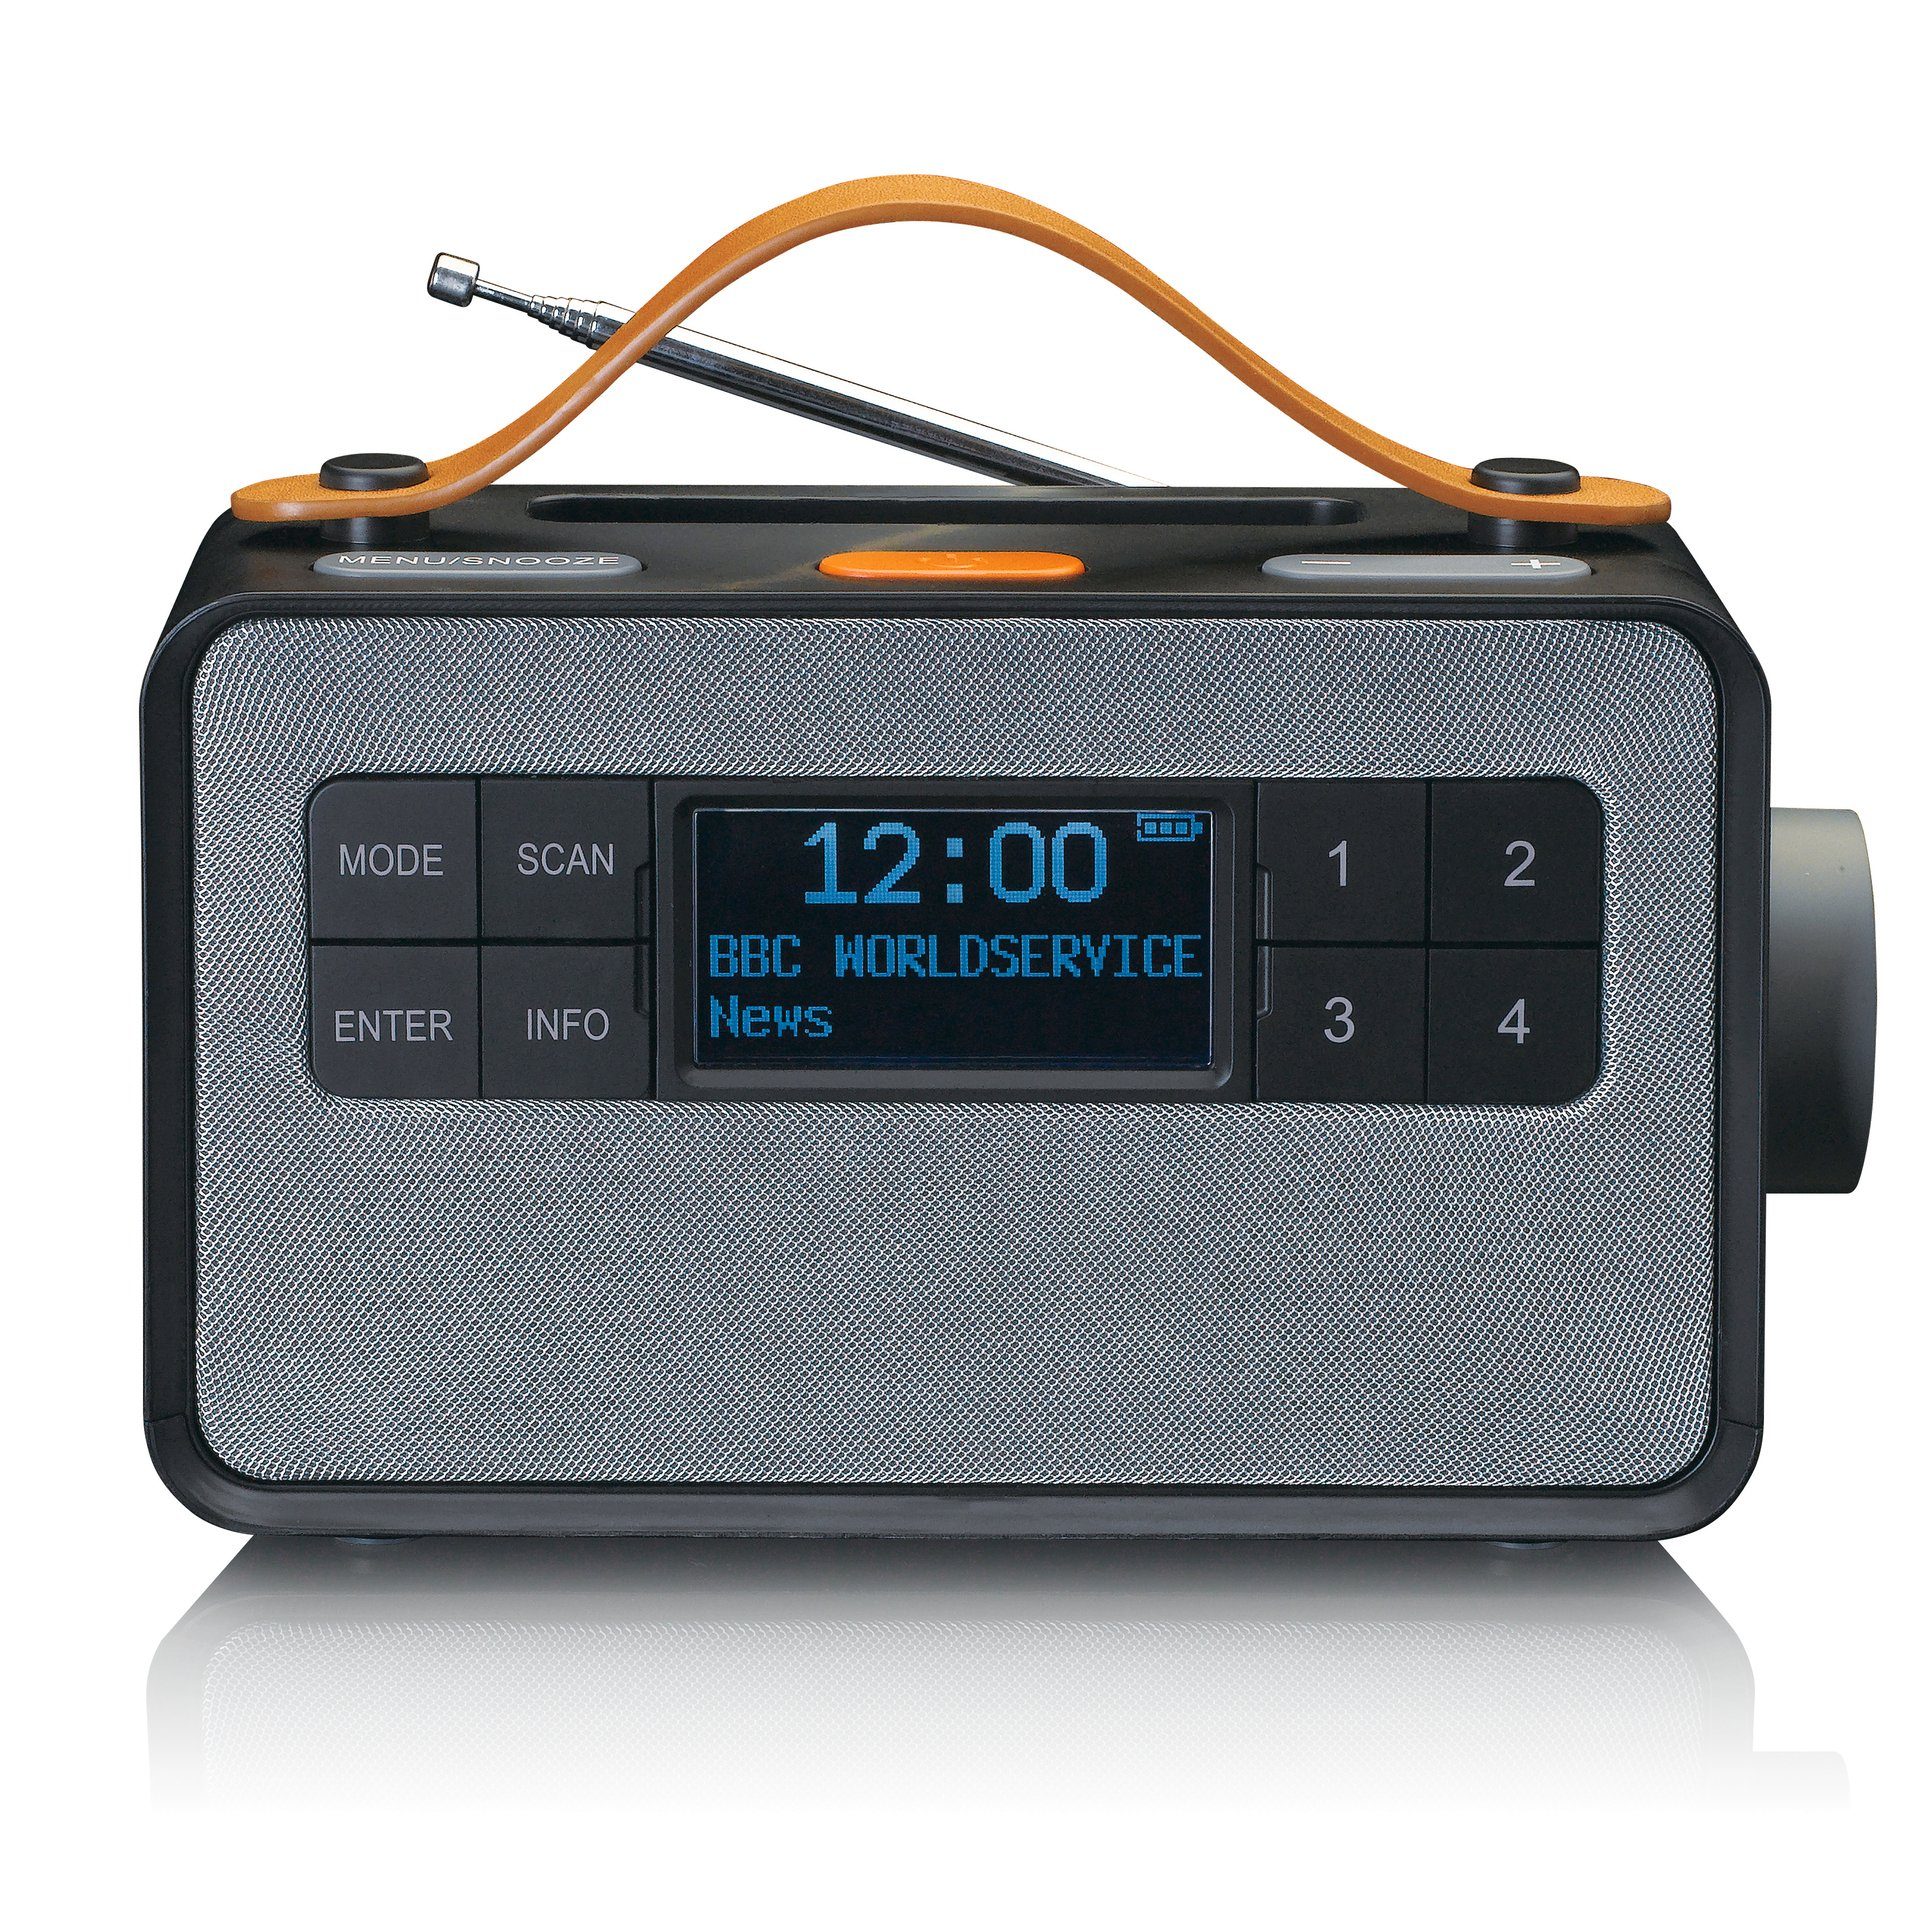 schwarz PDR-065 Lenco (DAB) Digitalradio